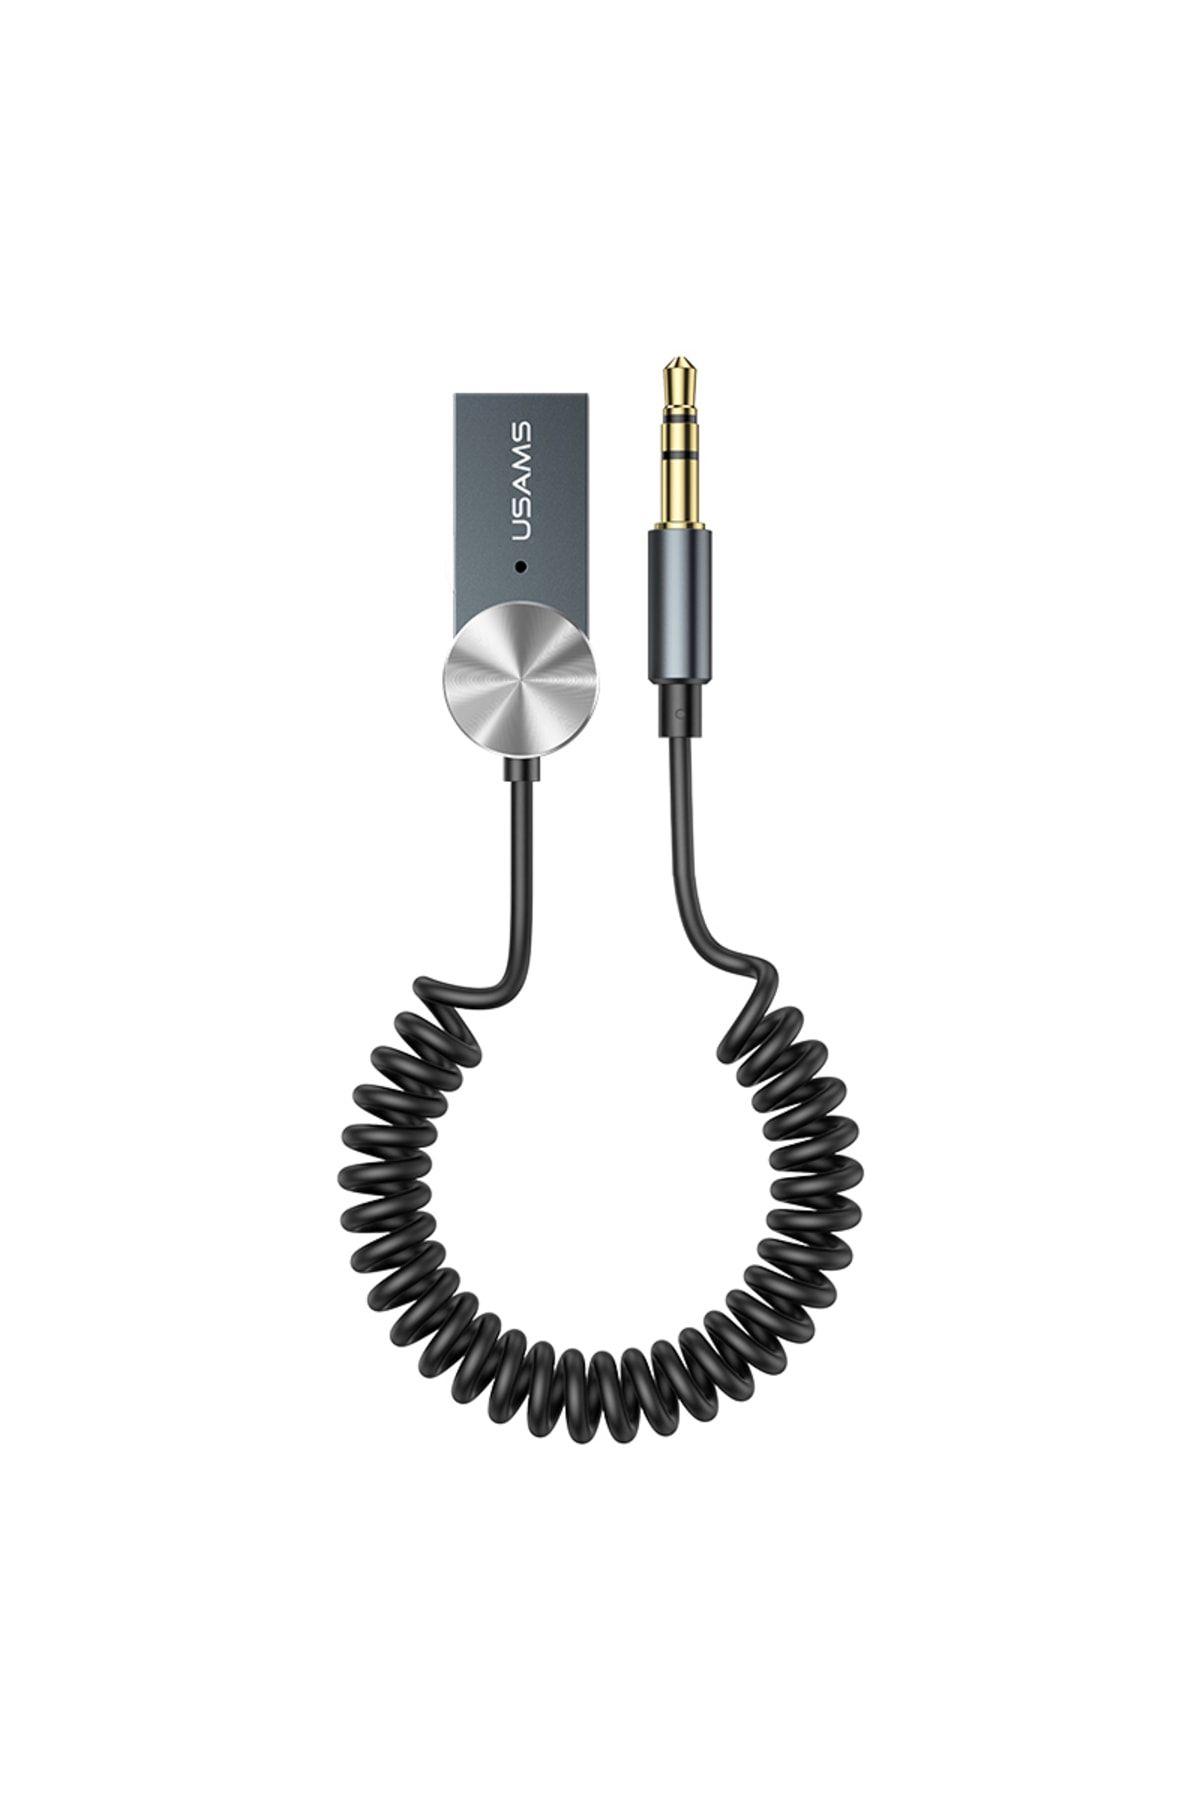 LivX Usams Bluetooth 5.0 Receiver Usb Aux Wireless Araç Kiti Telefon Konuşma Müzik Dinleme Ba01